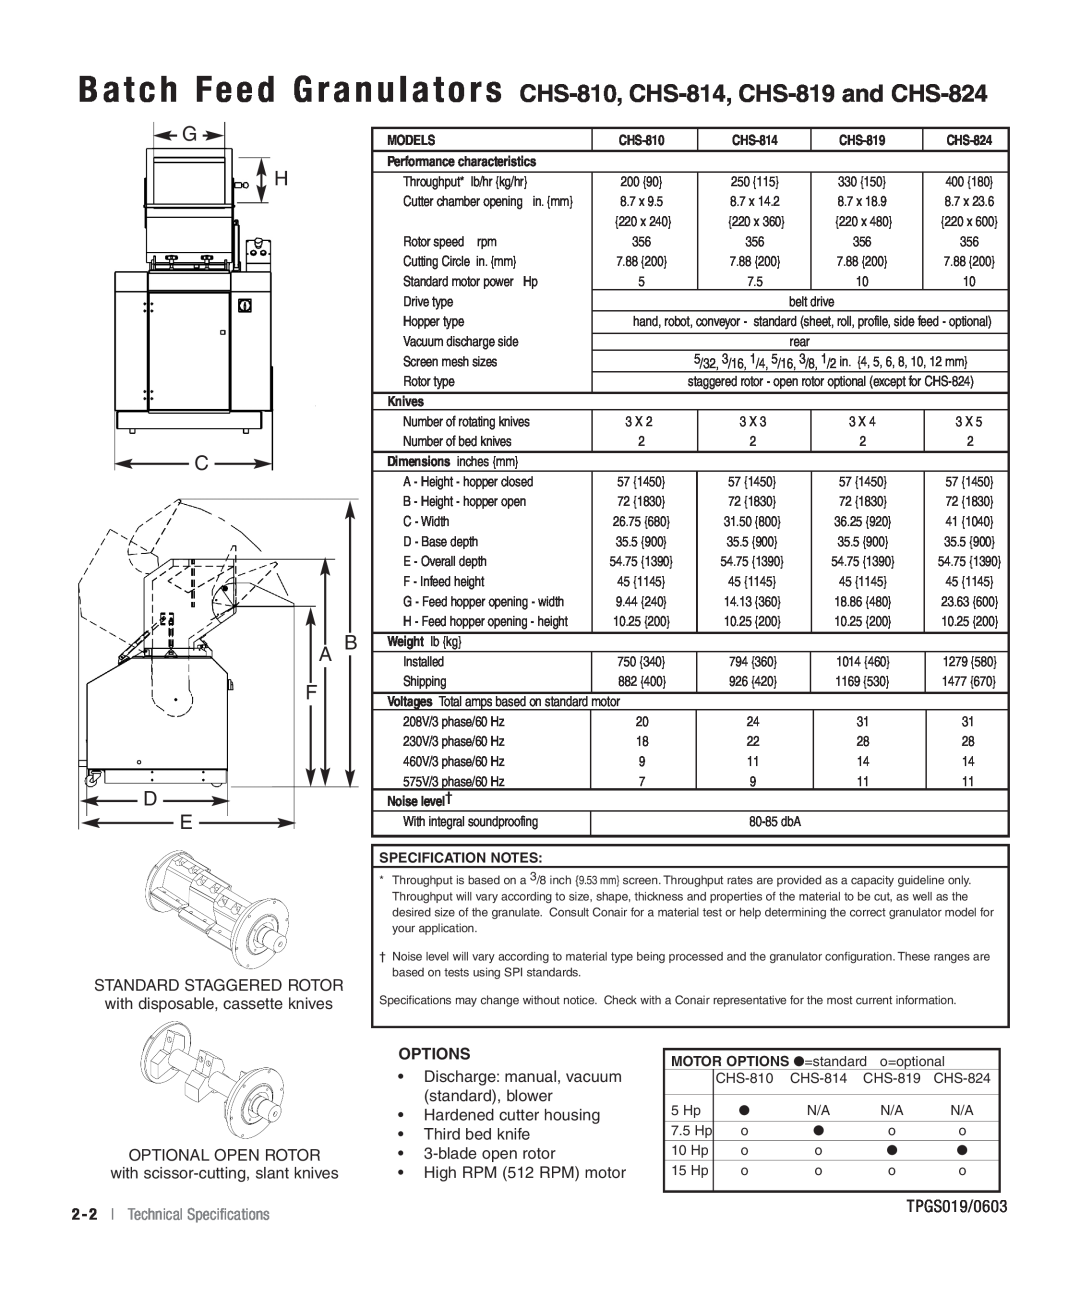 Conair Batch Feed Granulators CHS-810, CHS-814, CHS-819 and CHS-824, G H C A F D E, Options, Discharge manual, vacuum 